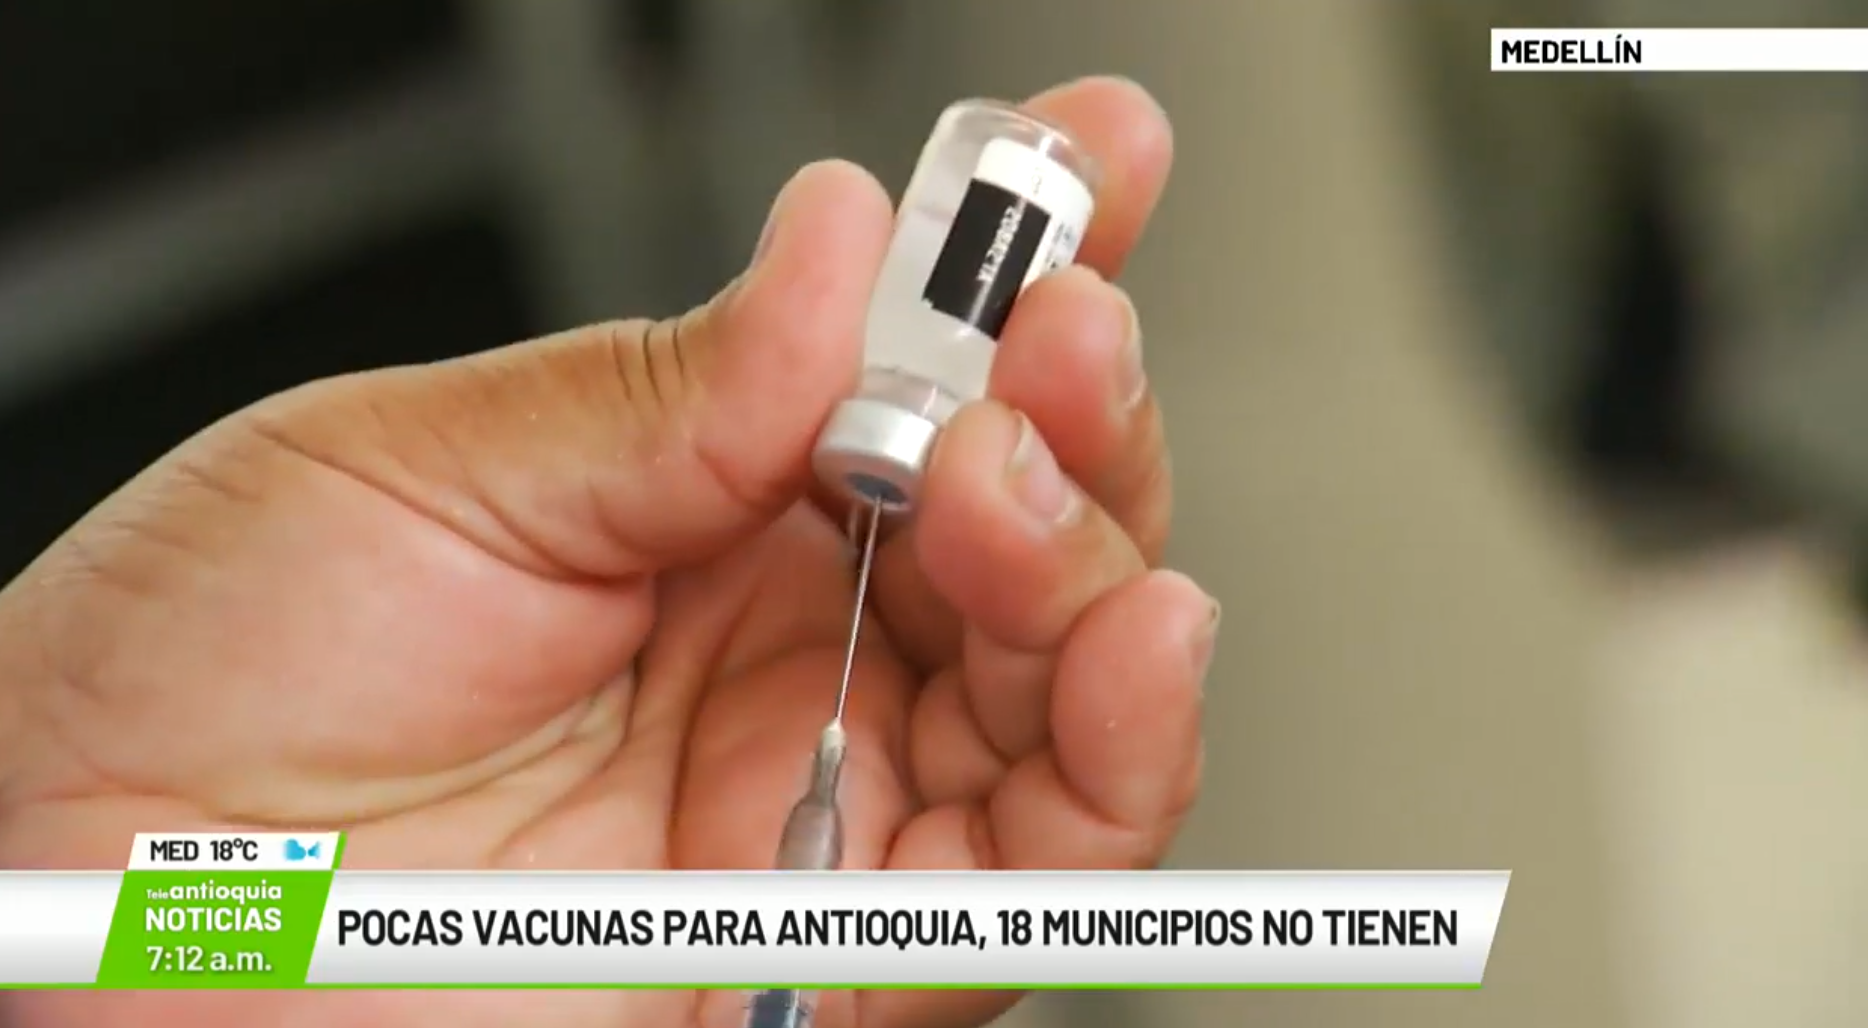 Pocas vacunas para Antioquia. 18 municipios no tienen